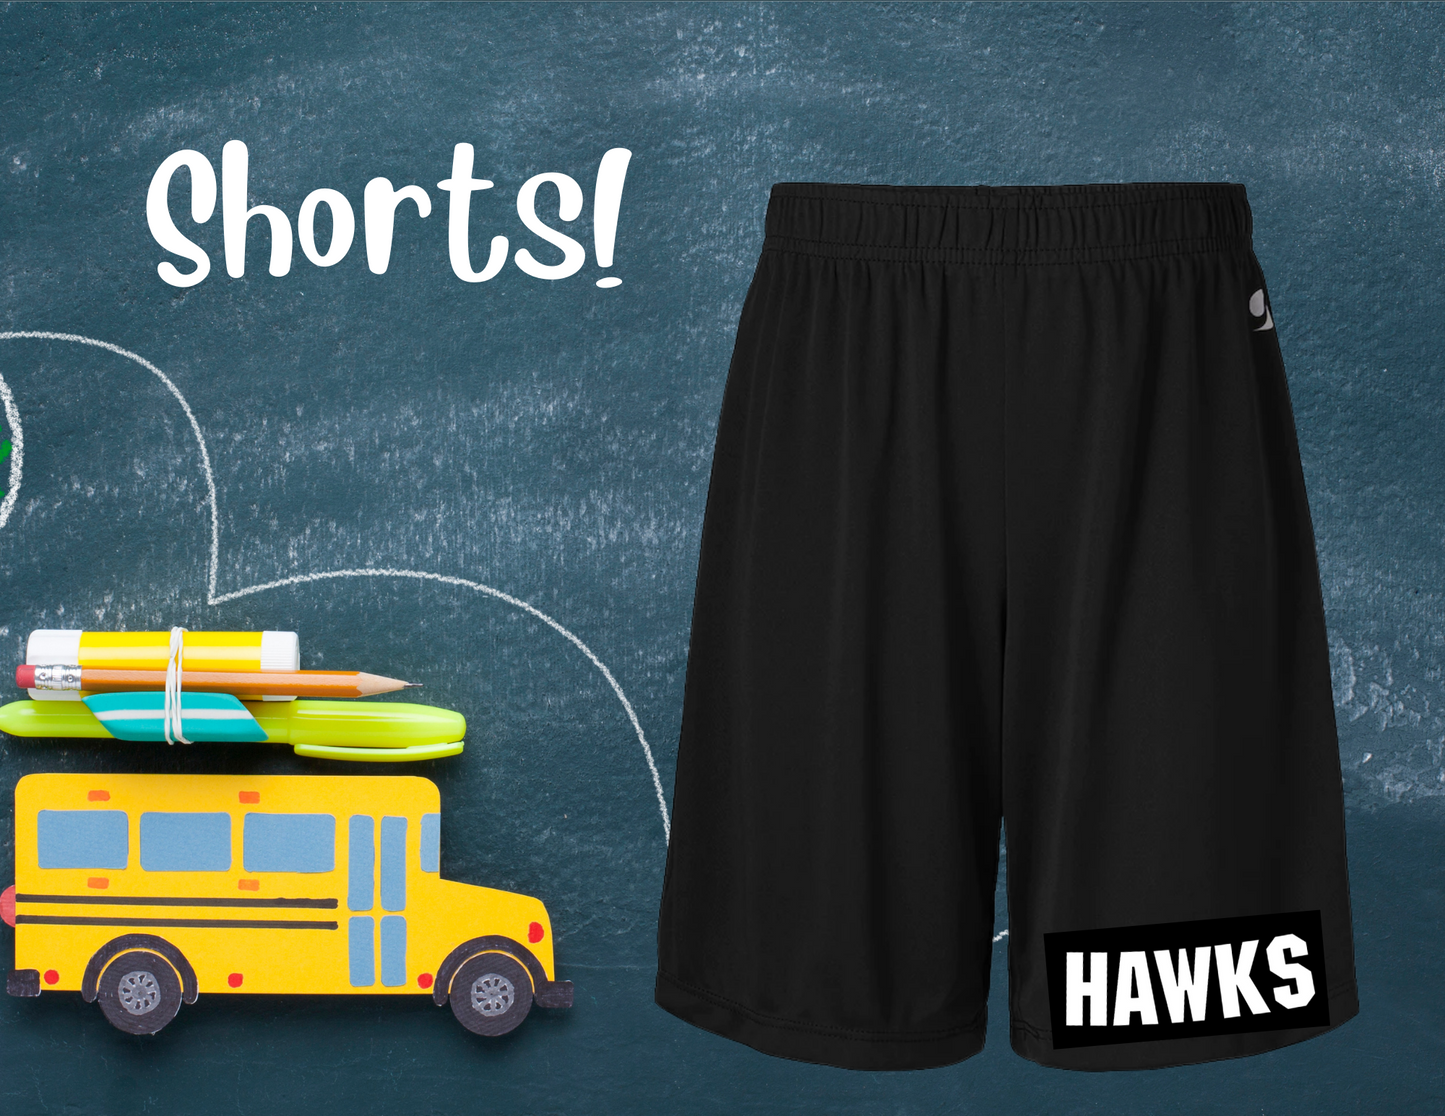 Haddon Heights Christian Preschool Shorts